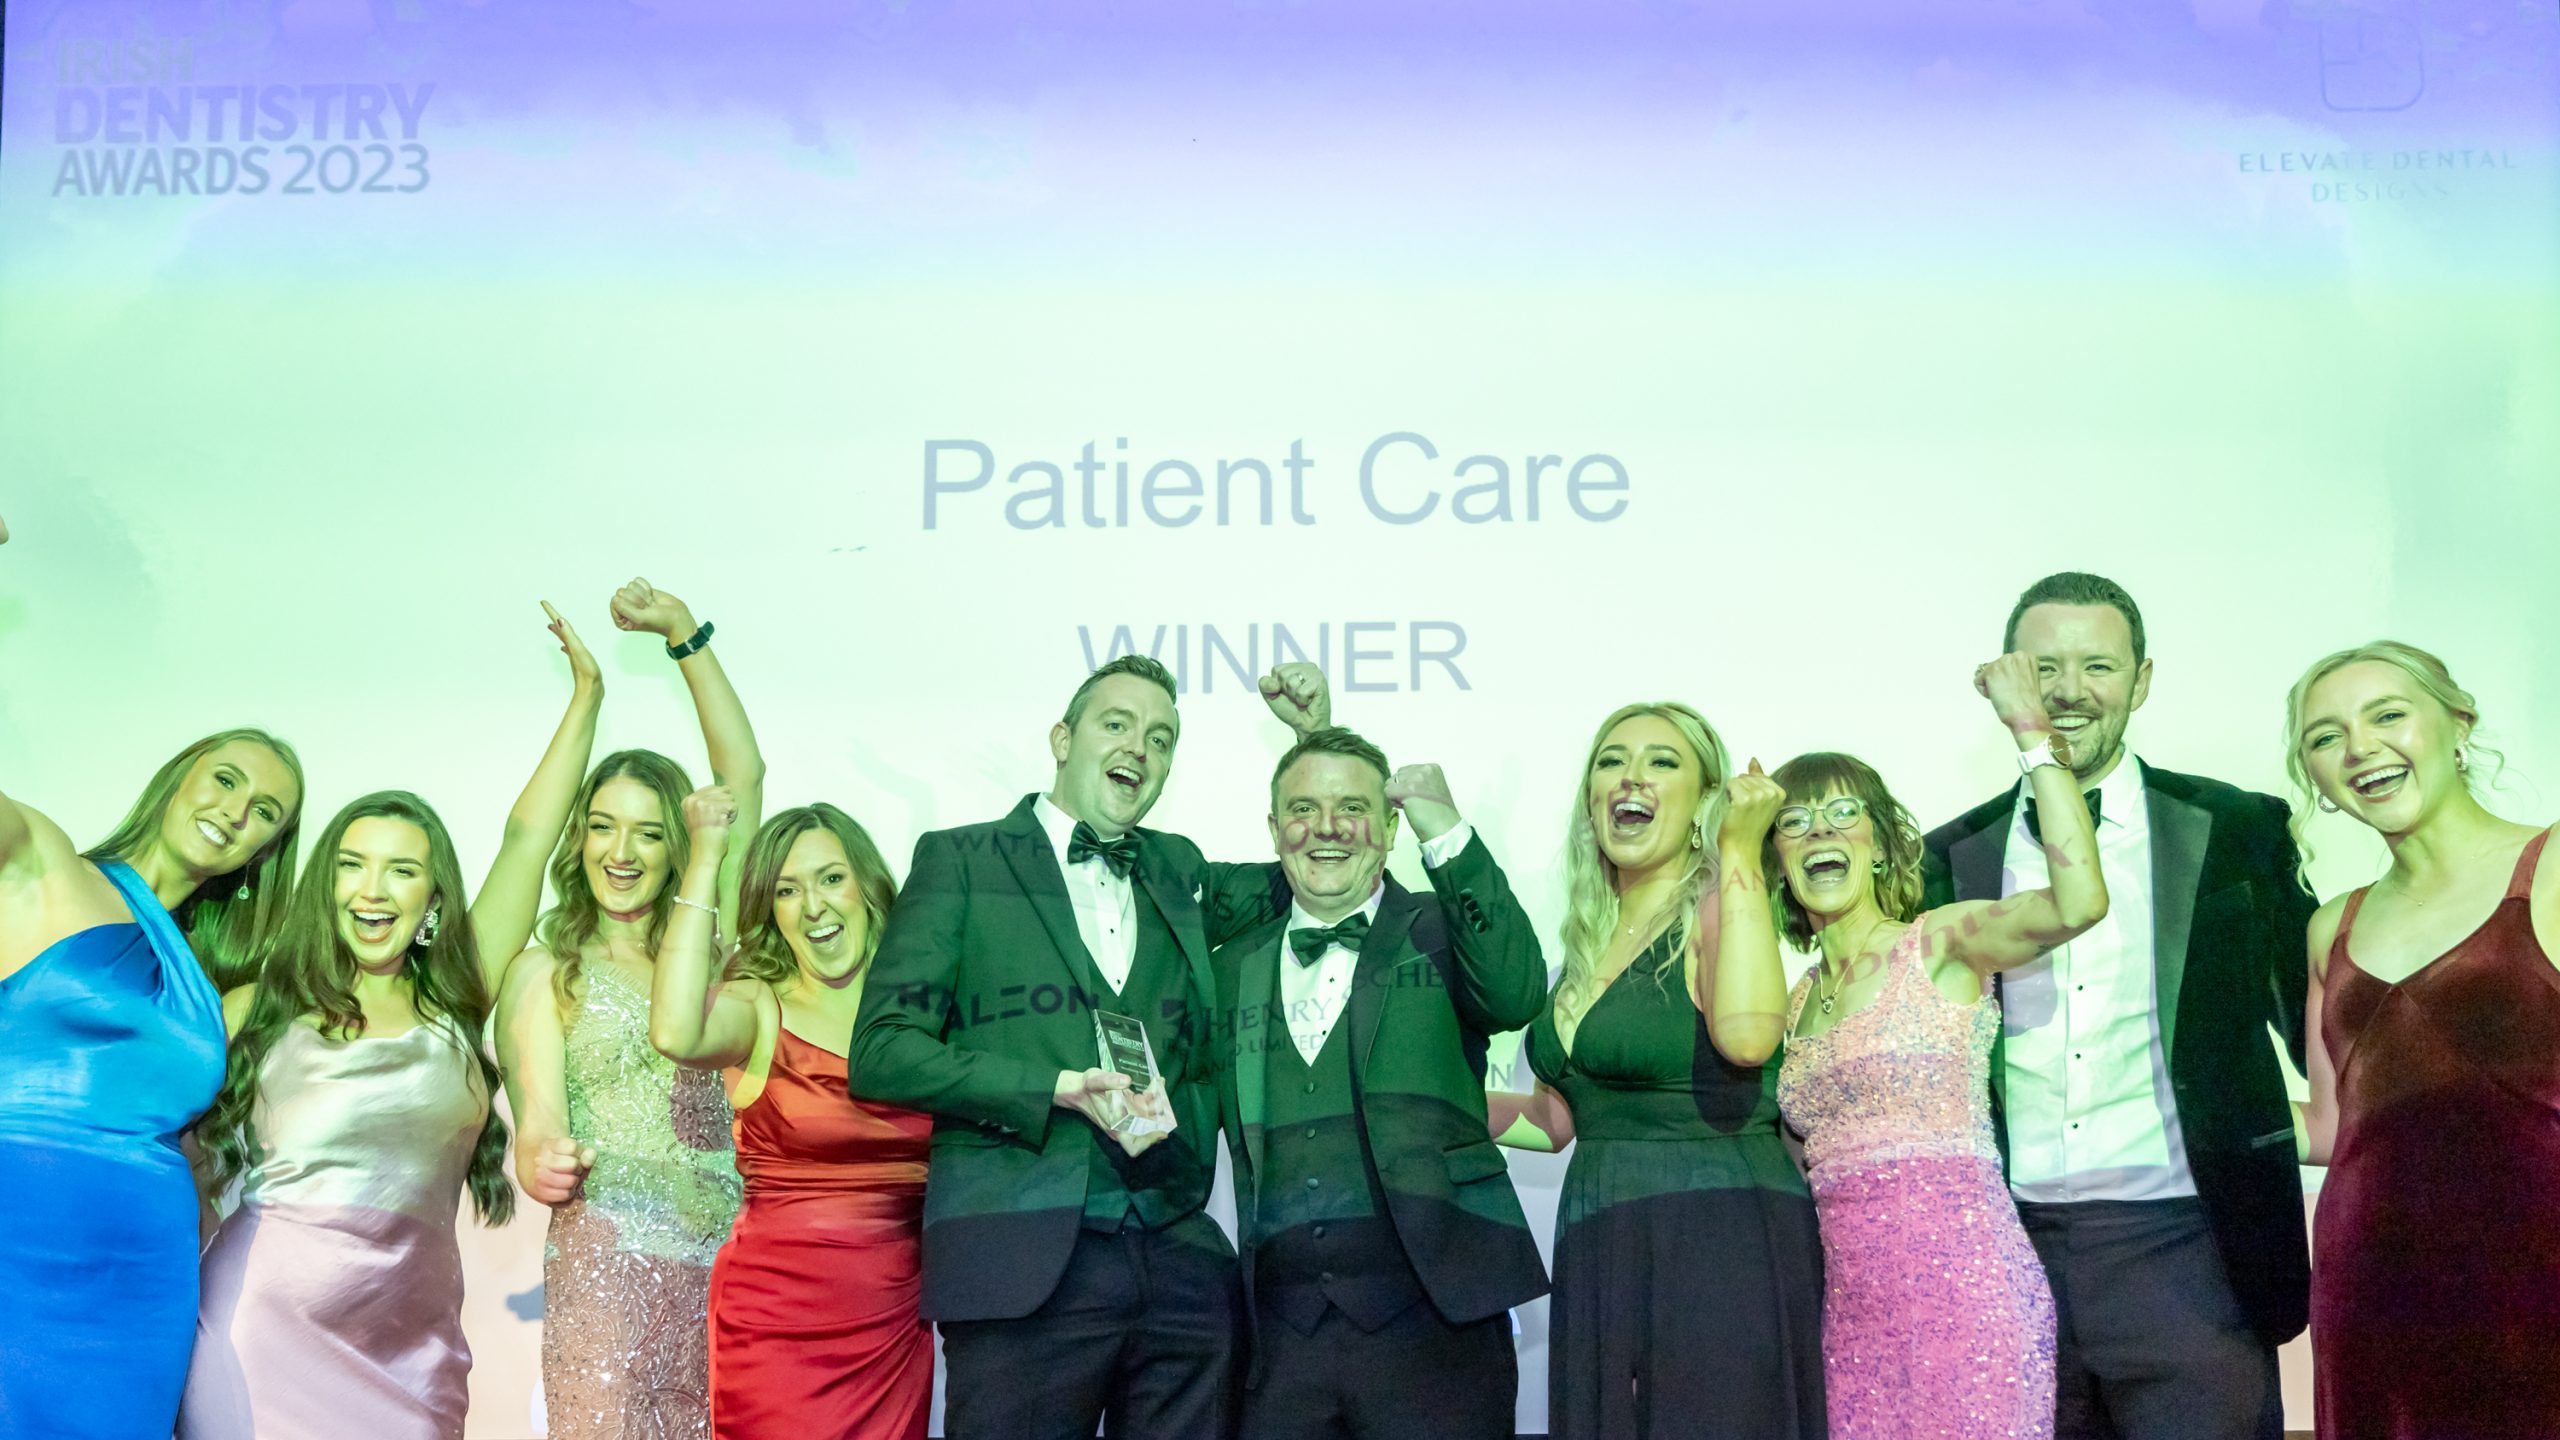 Patient Care, Irish Dentists Awards 2023